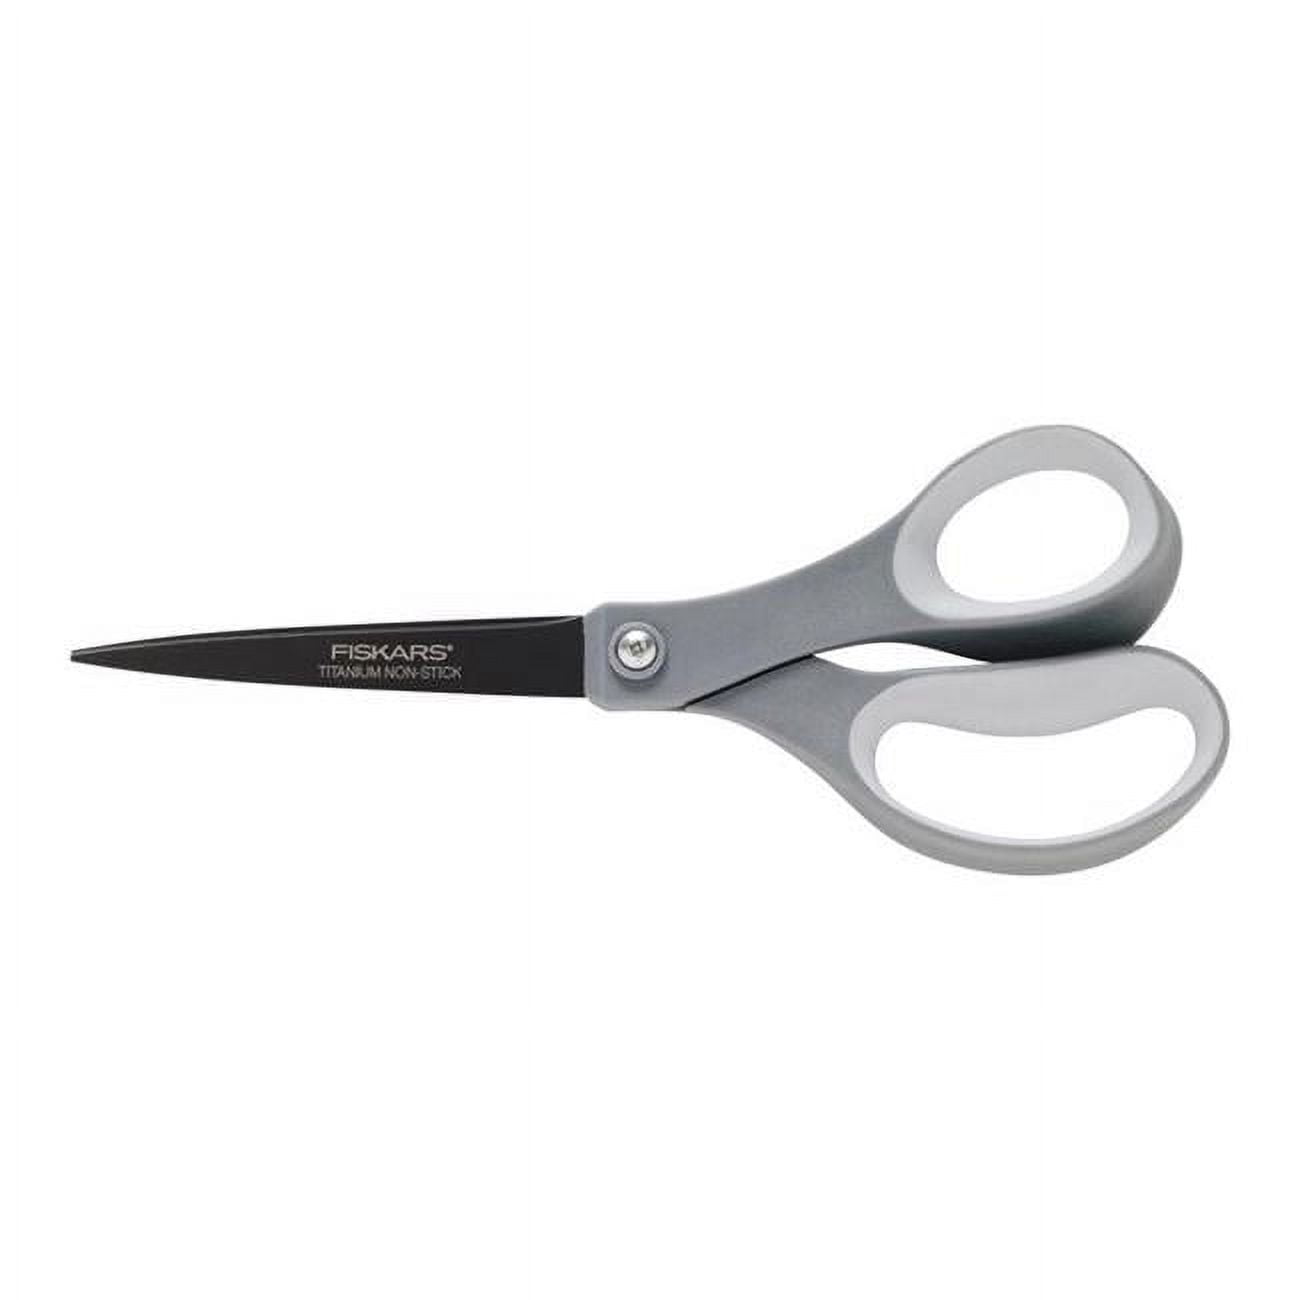 2pc Folding Scissors Pocket Travel Small Cut Cutter Crafts Sharp Blade  Emergency 